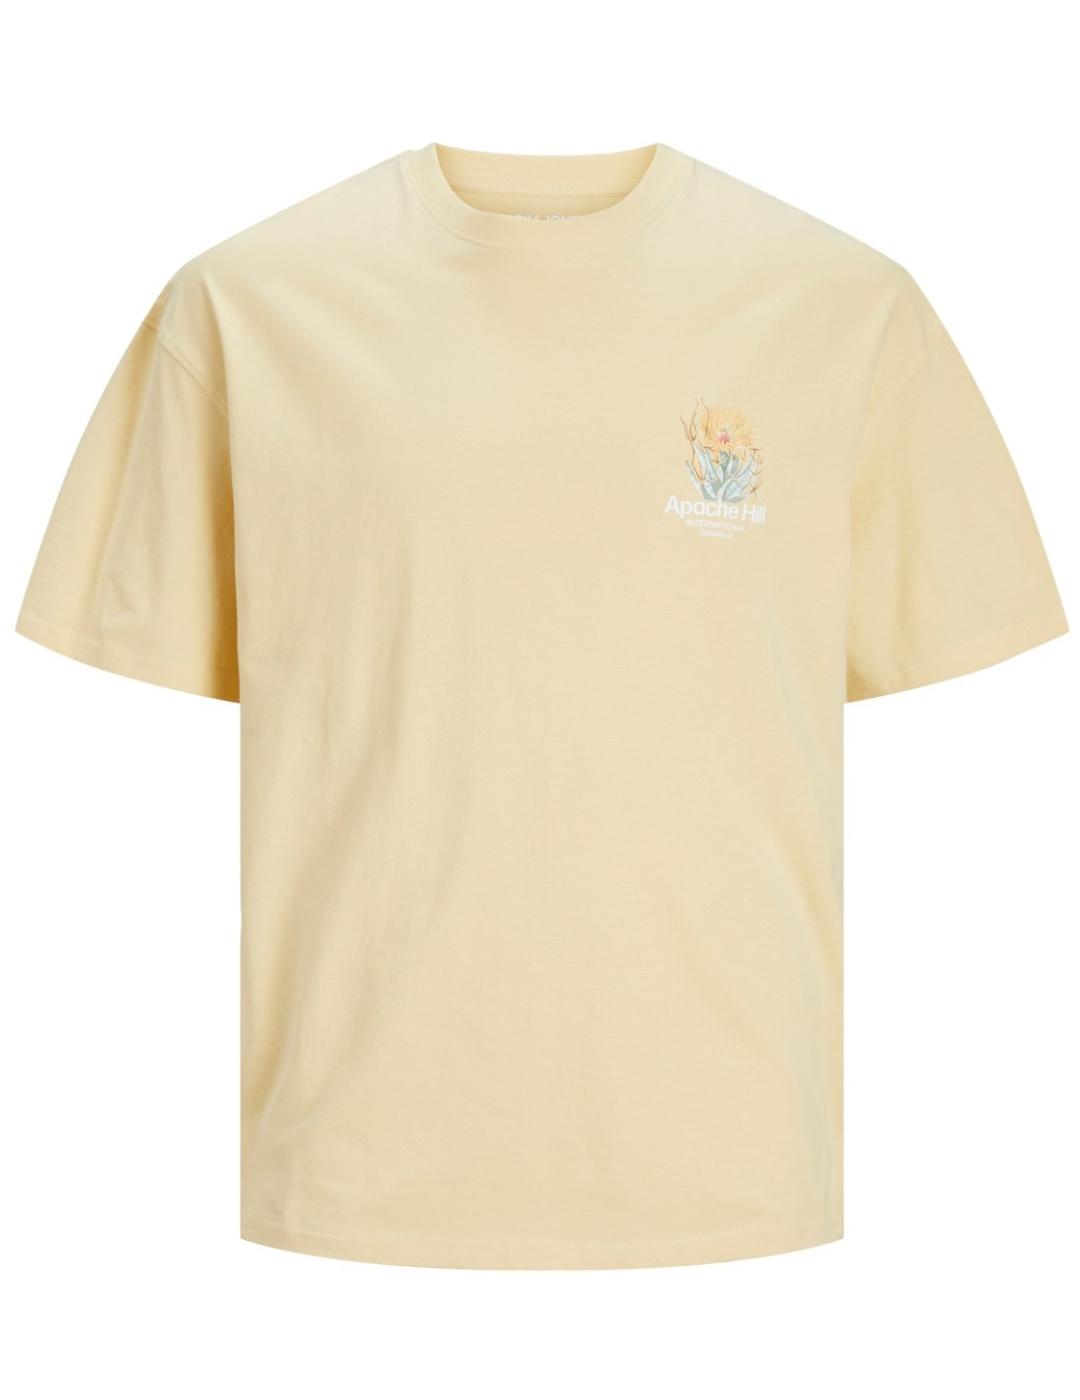 Camiseta Jack&Jones Blanca amarillo manga corta para hombre